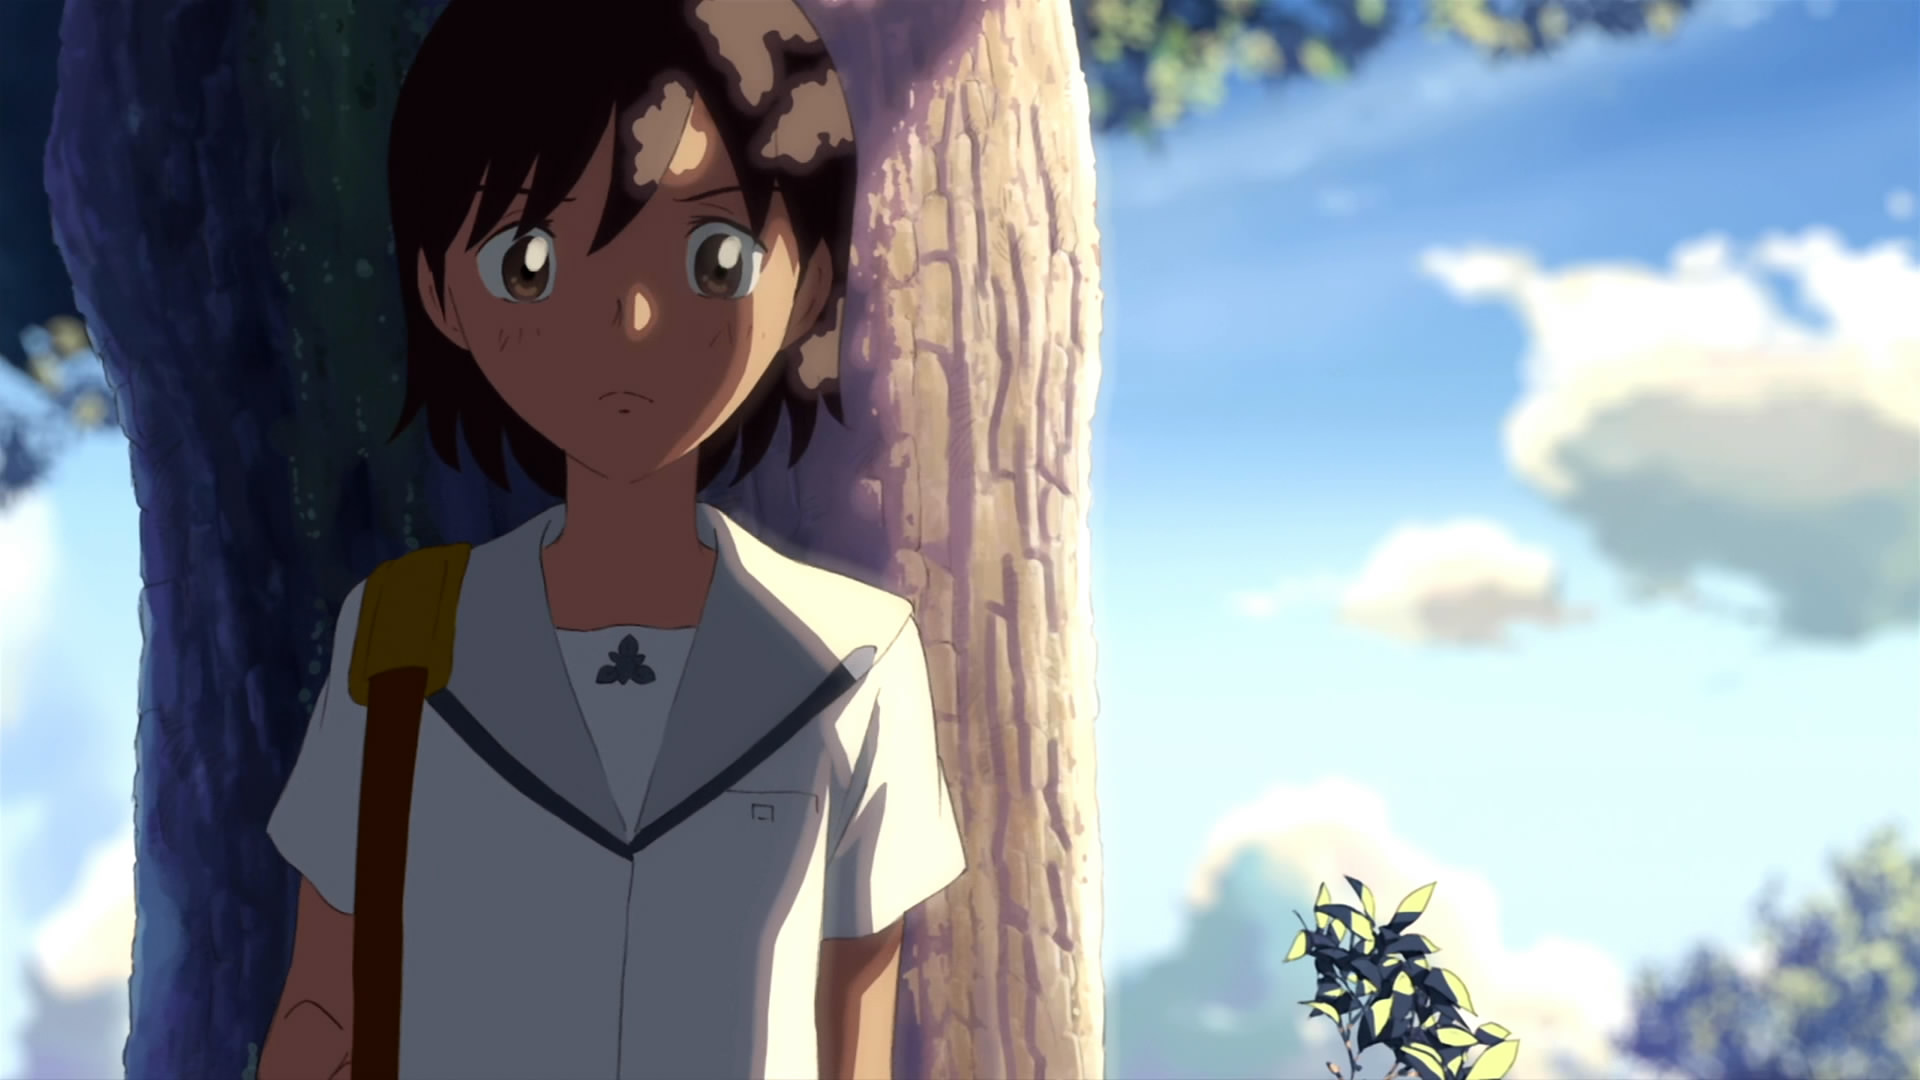 Gokil Kehidupancom Film Anime Jepang Romantis Mengharukan